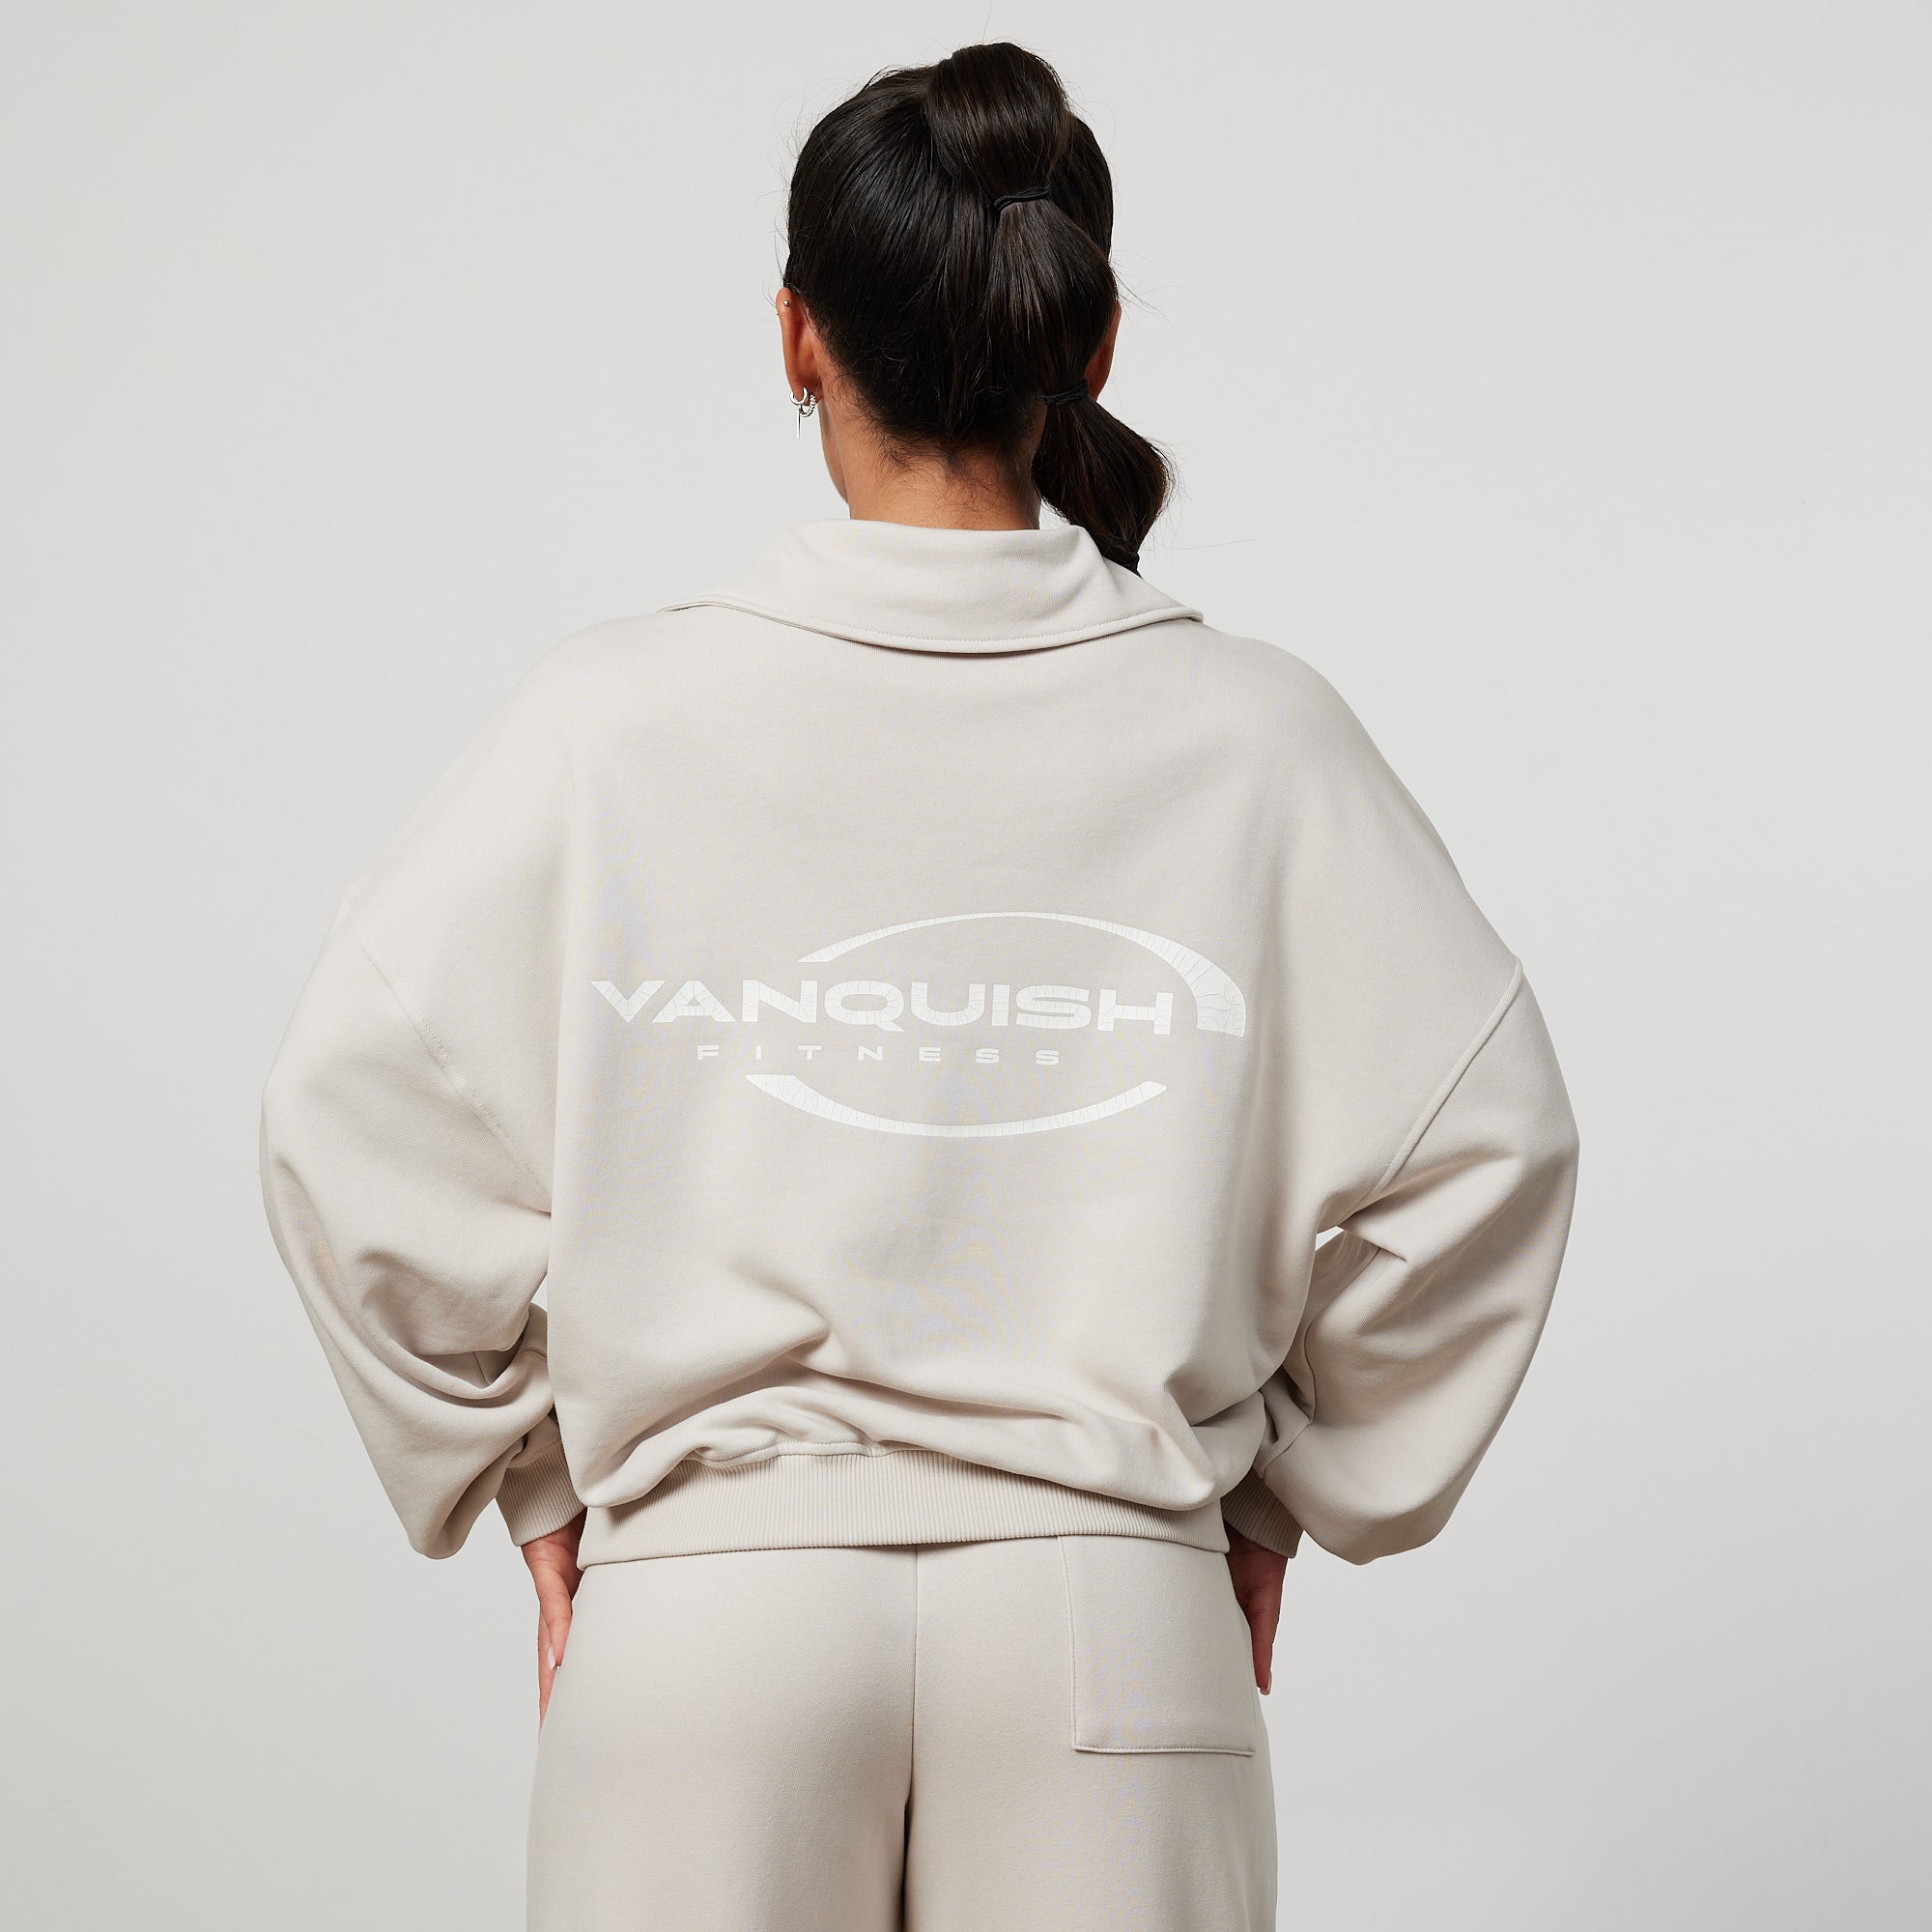 Vanquish Enhance Nude Collar Sweatshirt